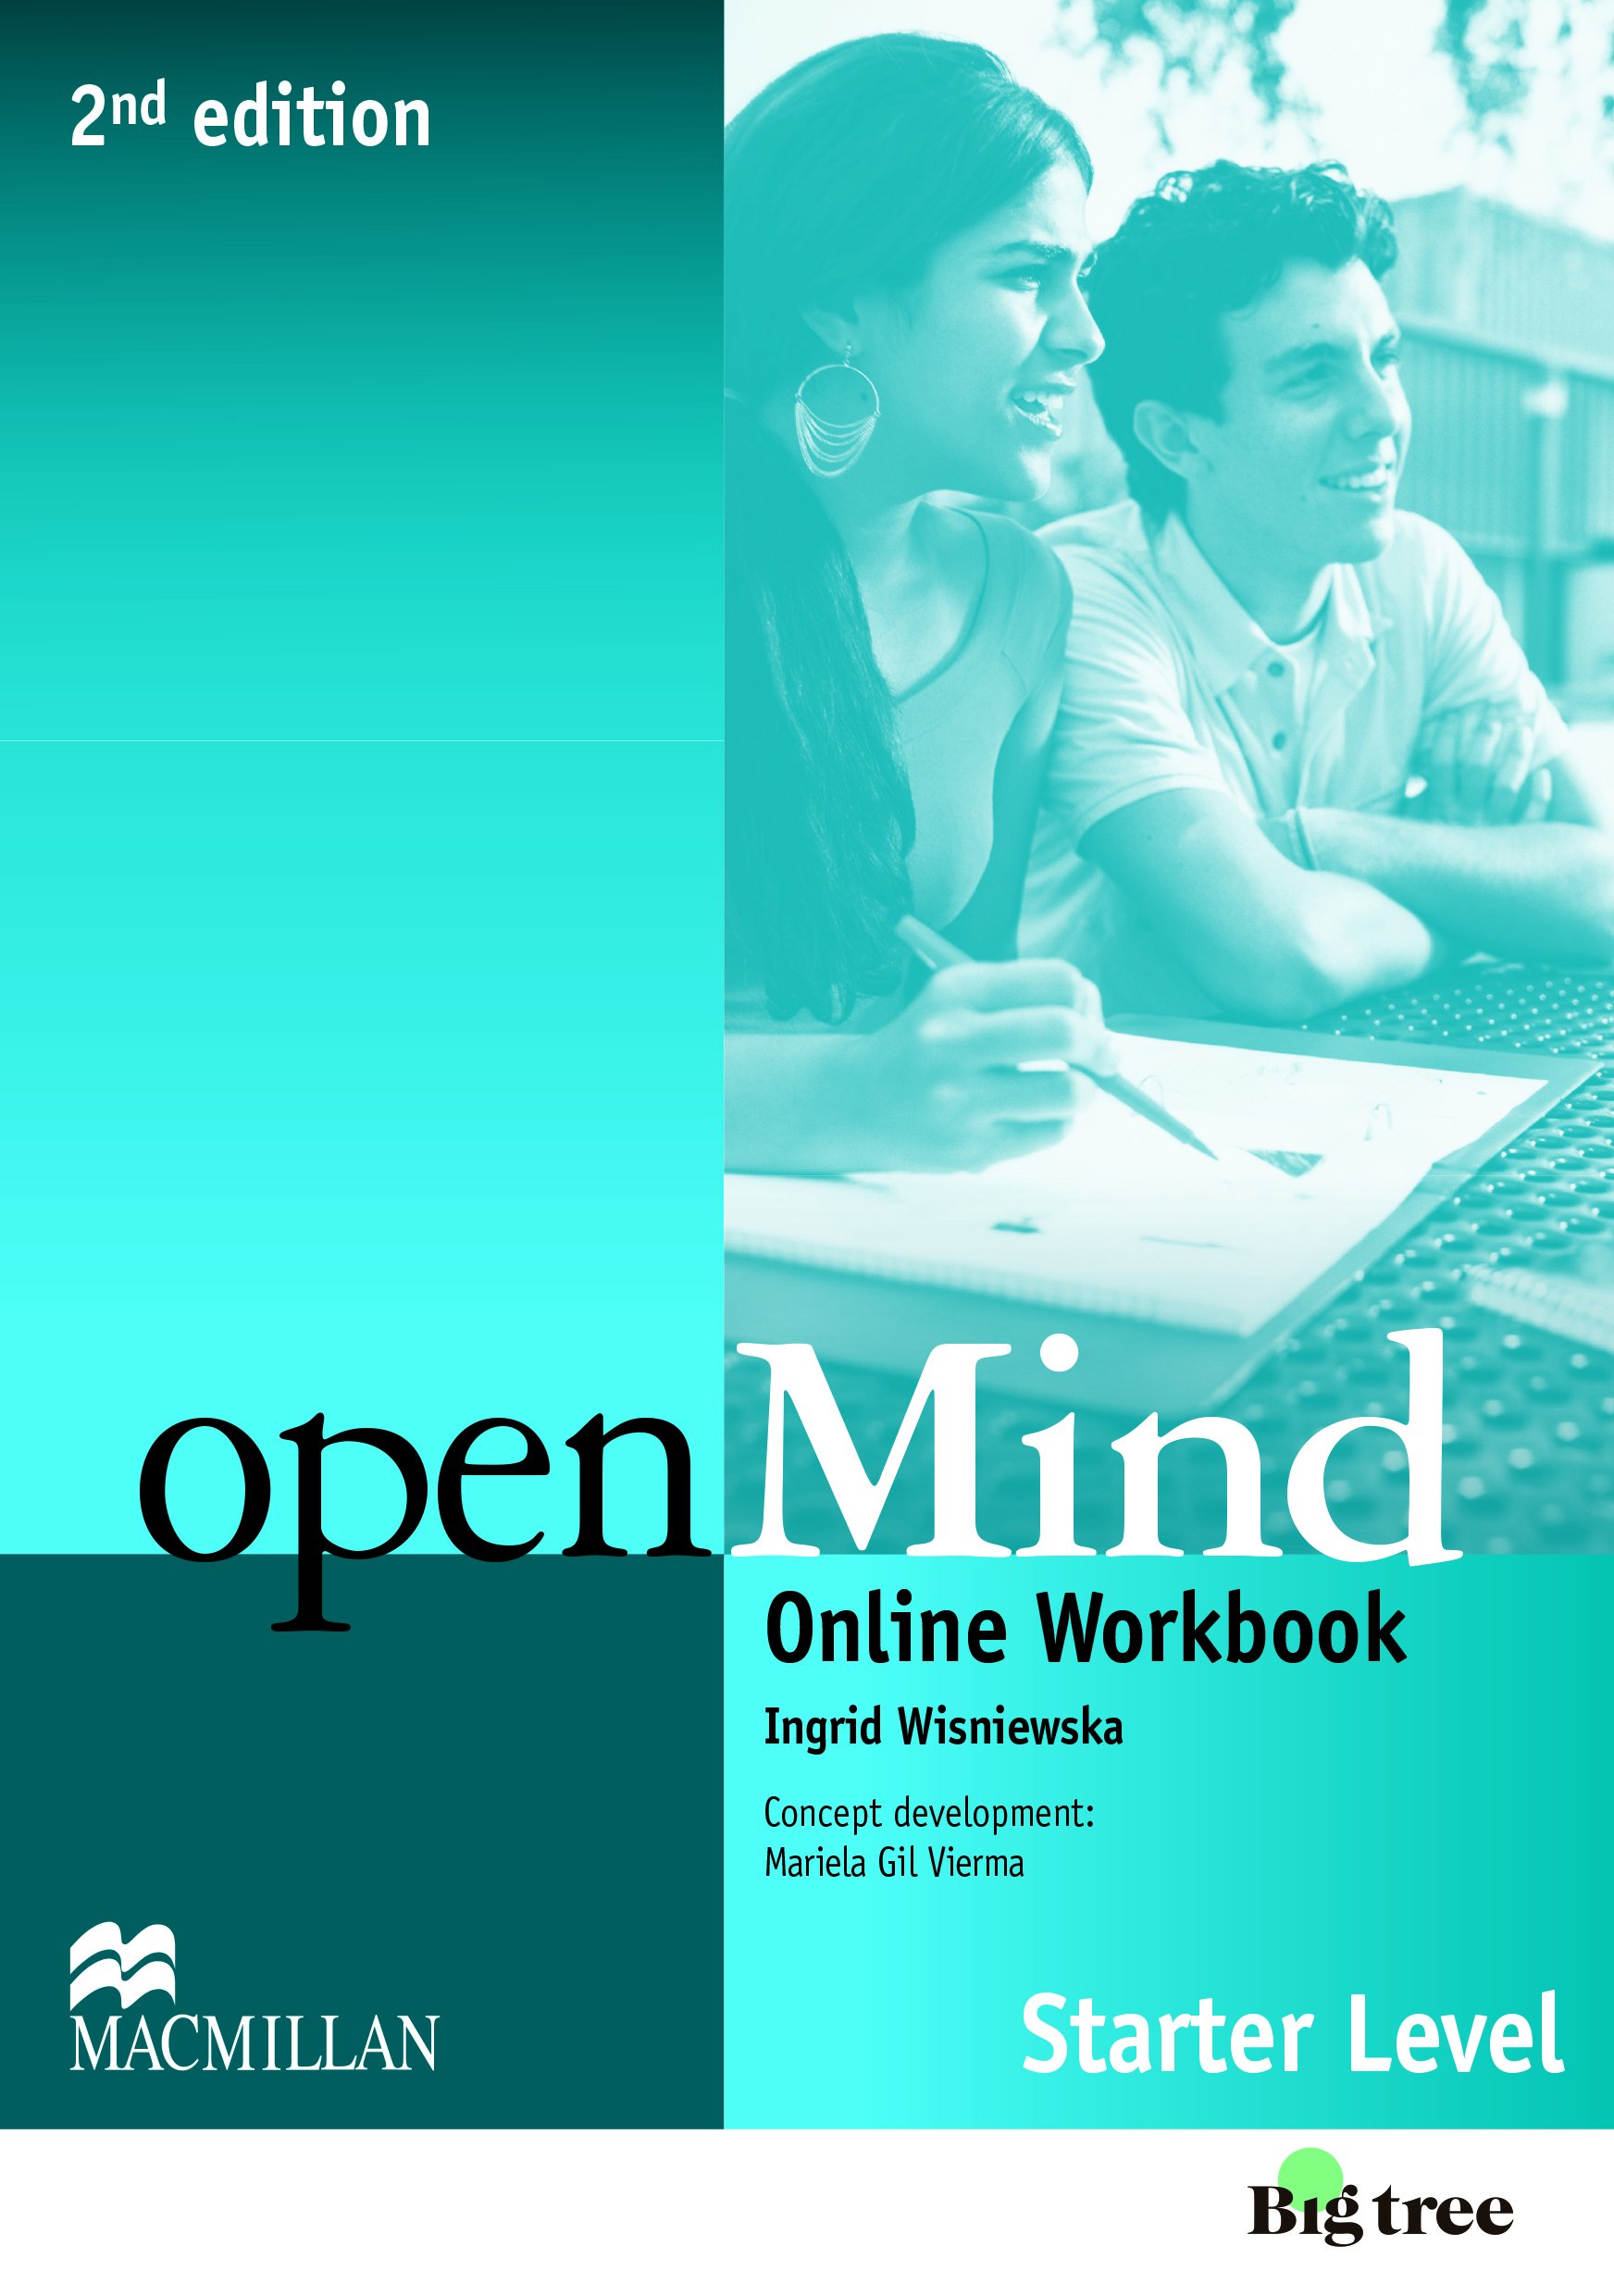 Open Mind students book. Macmillan Learning teaching. Own it! Level 1. Workbook. Starter Workbook 2nd Edition 56.